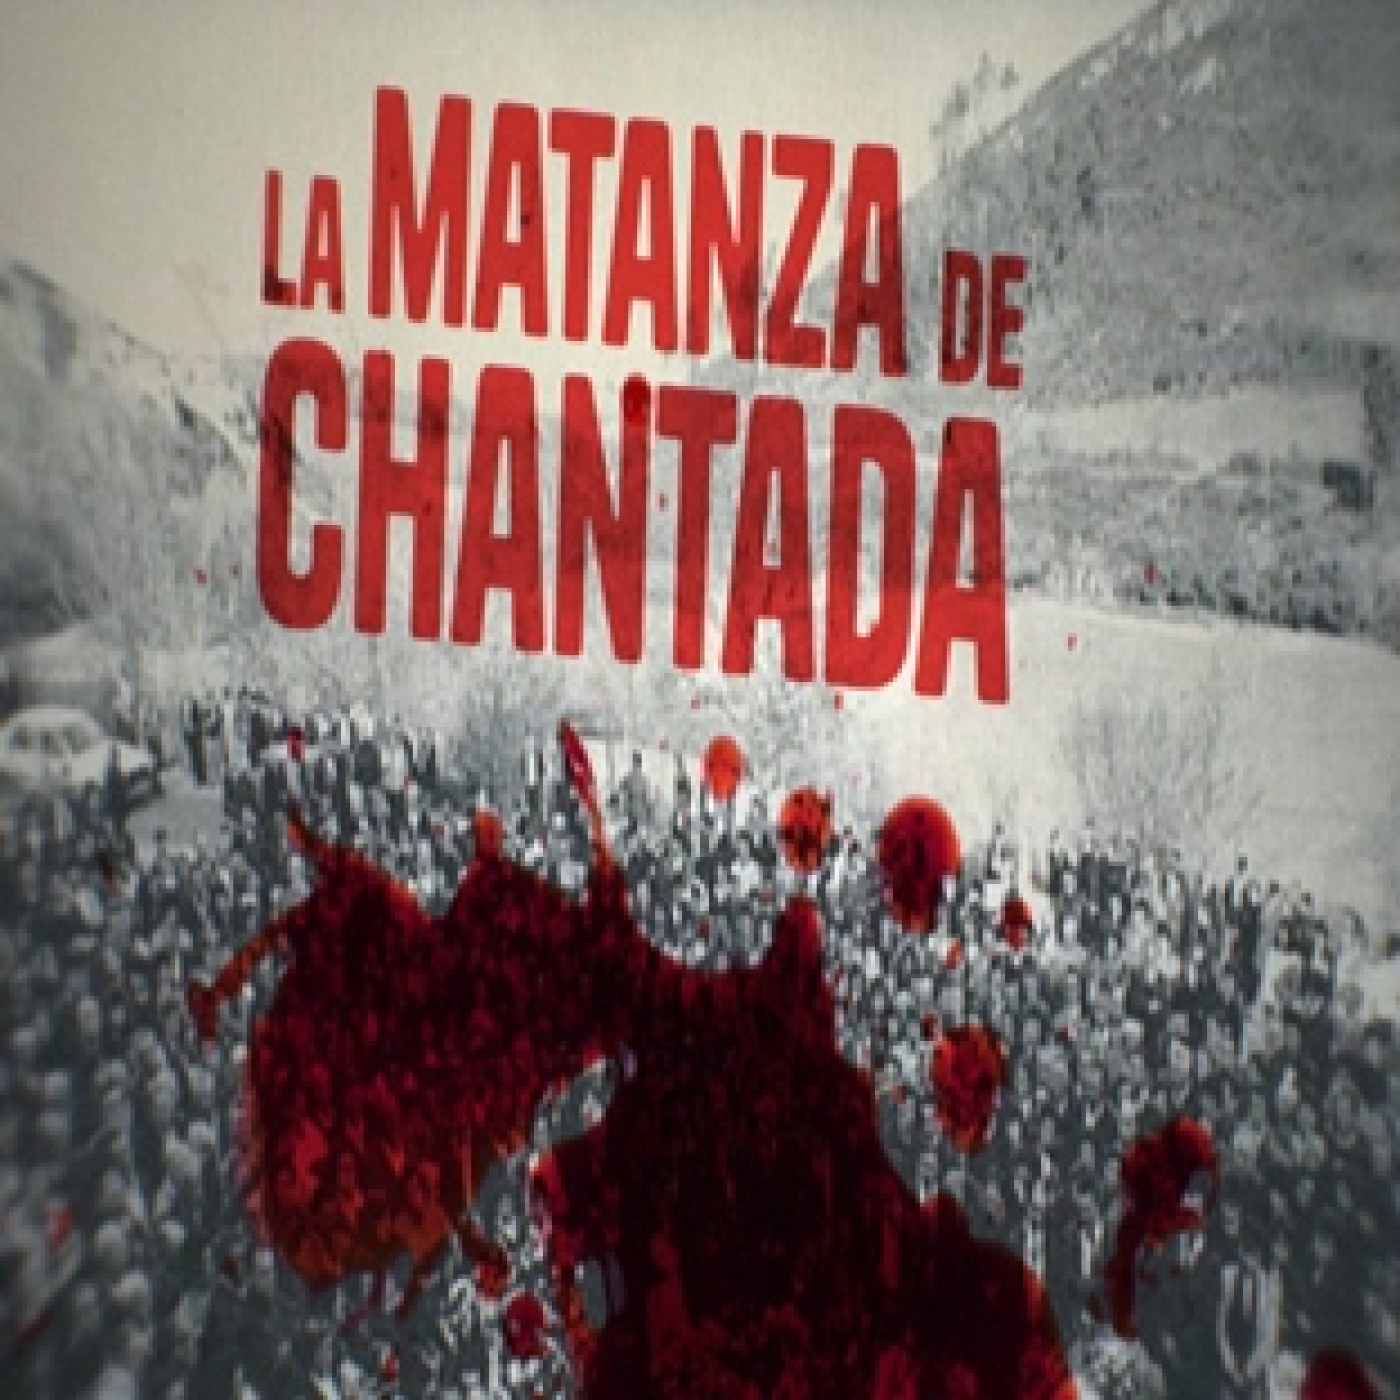 Cuarto Milenio: La matanza de Chantada